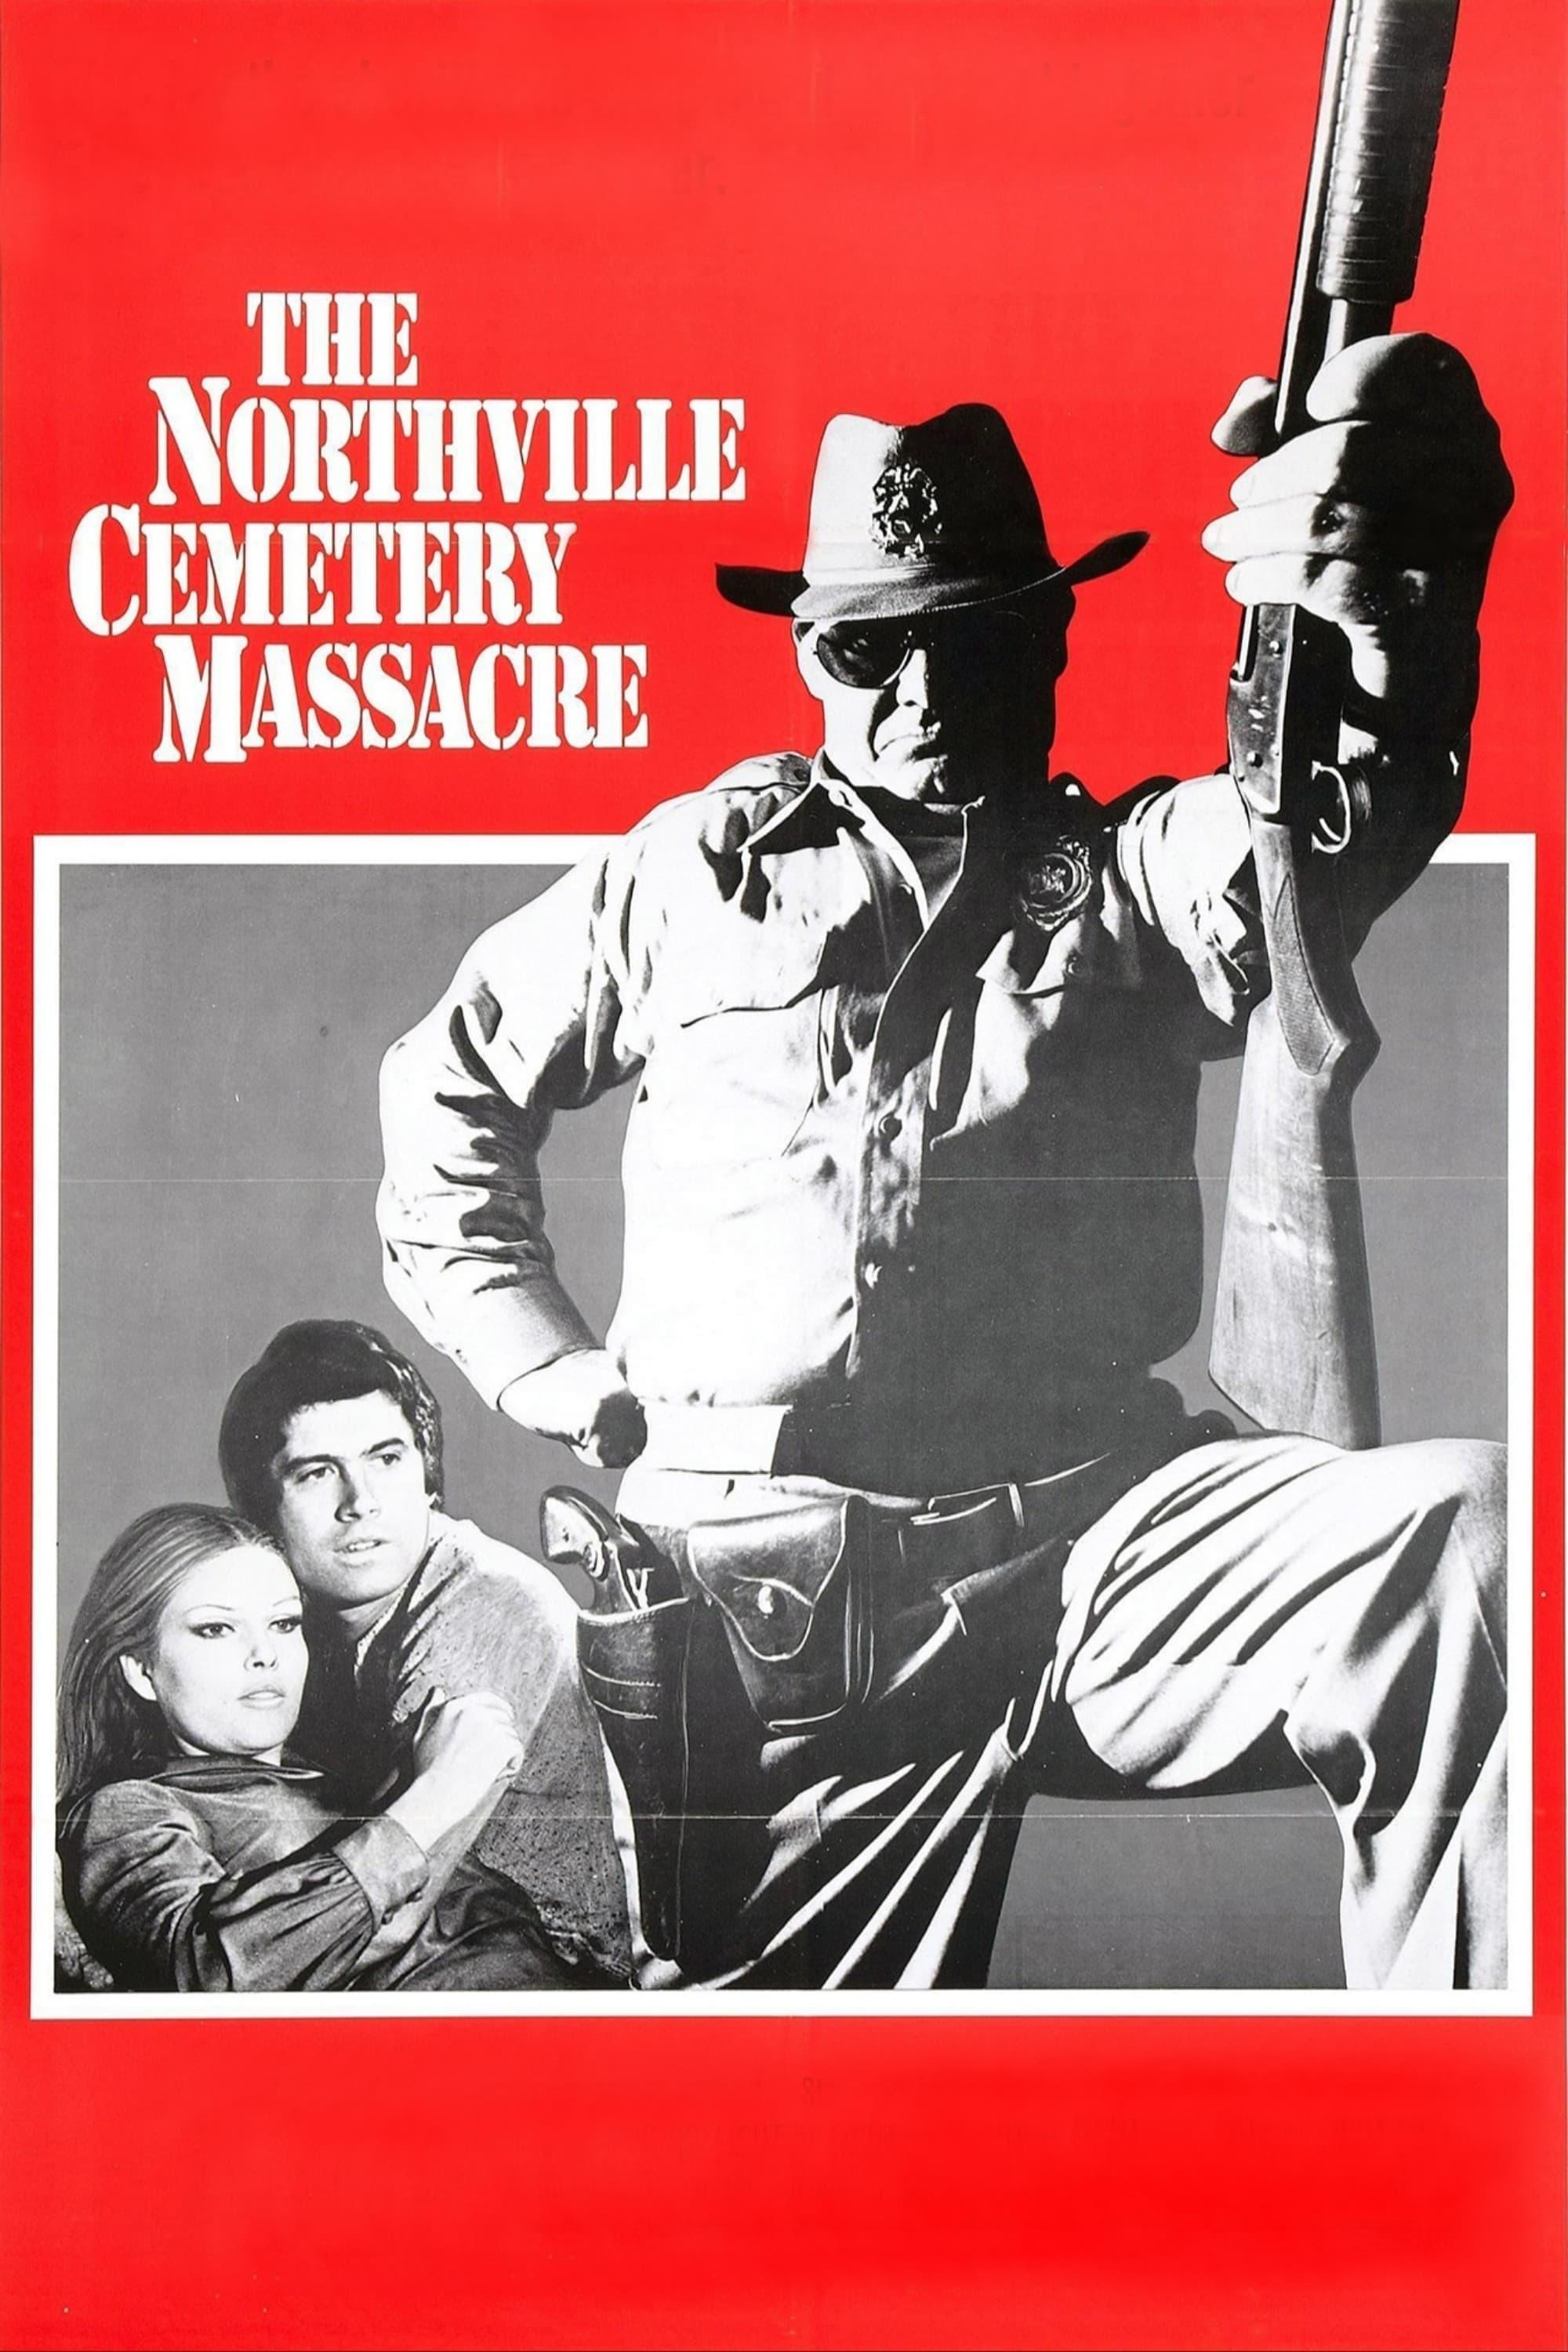 The Northville Cemetery Massacre poster